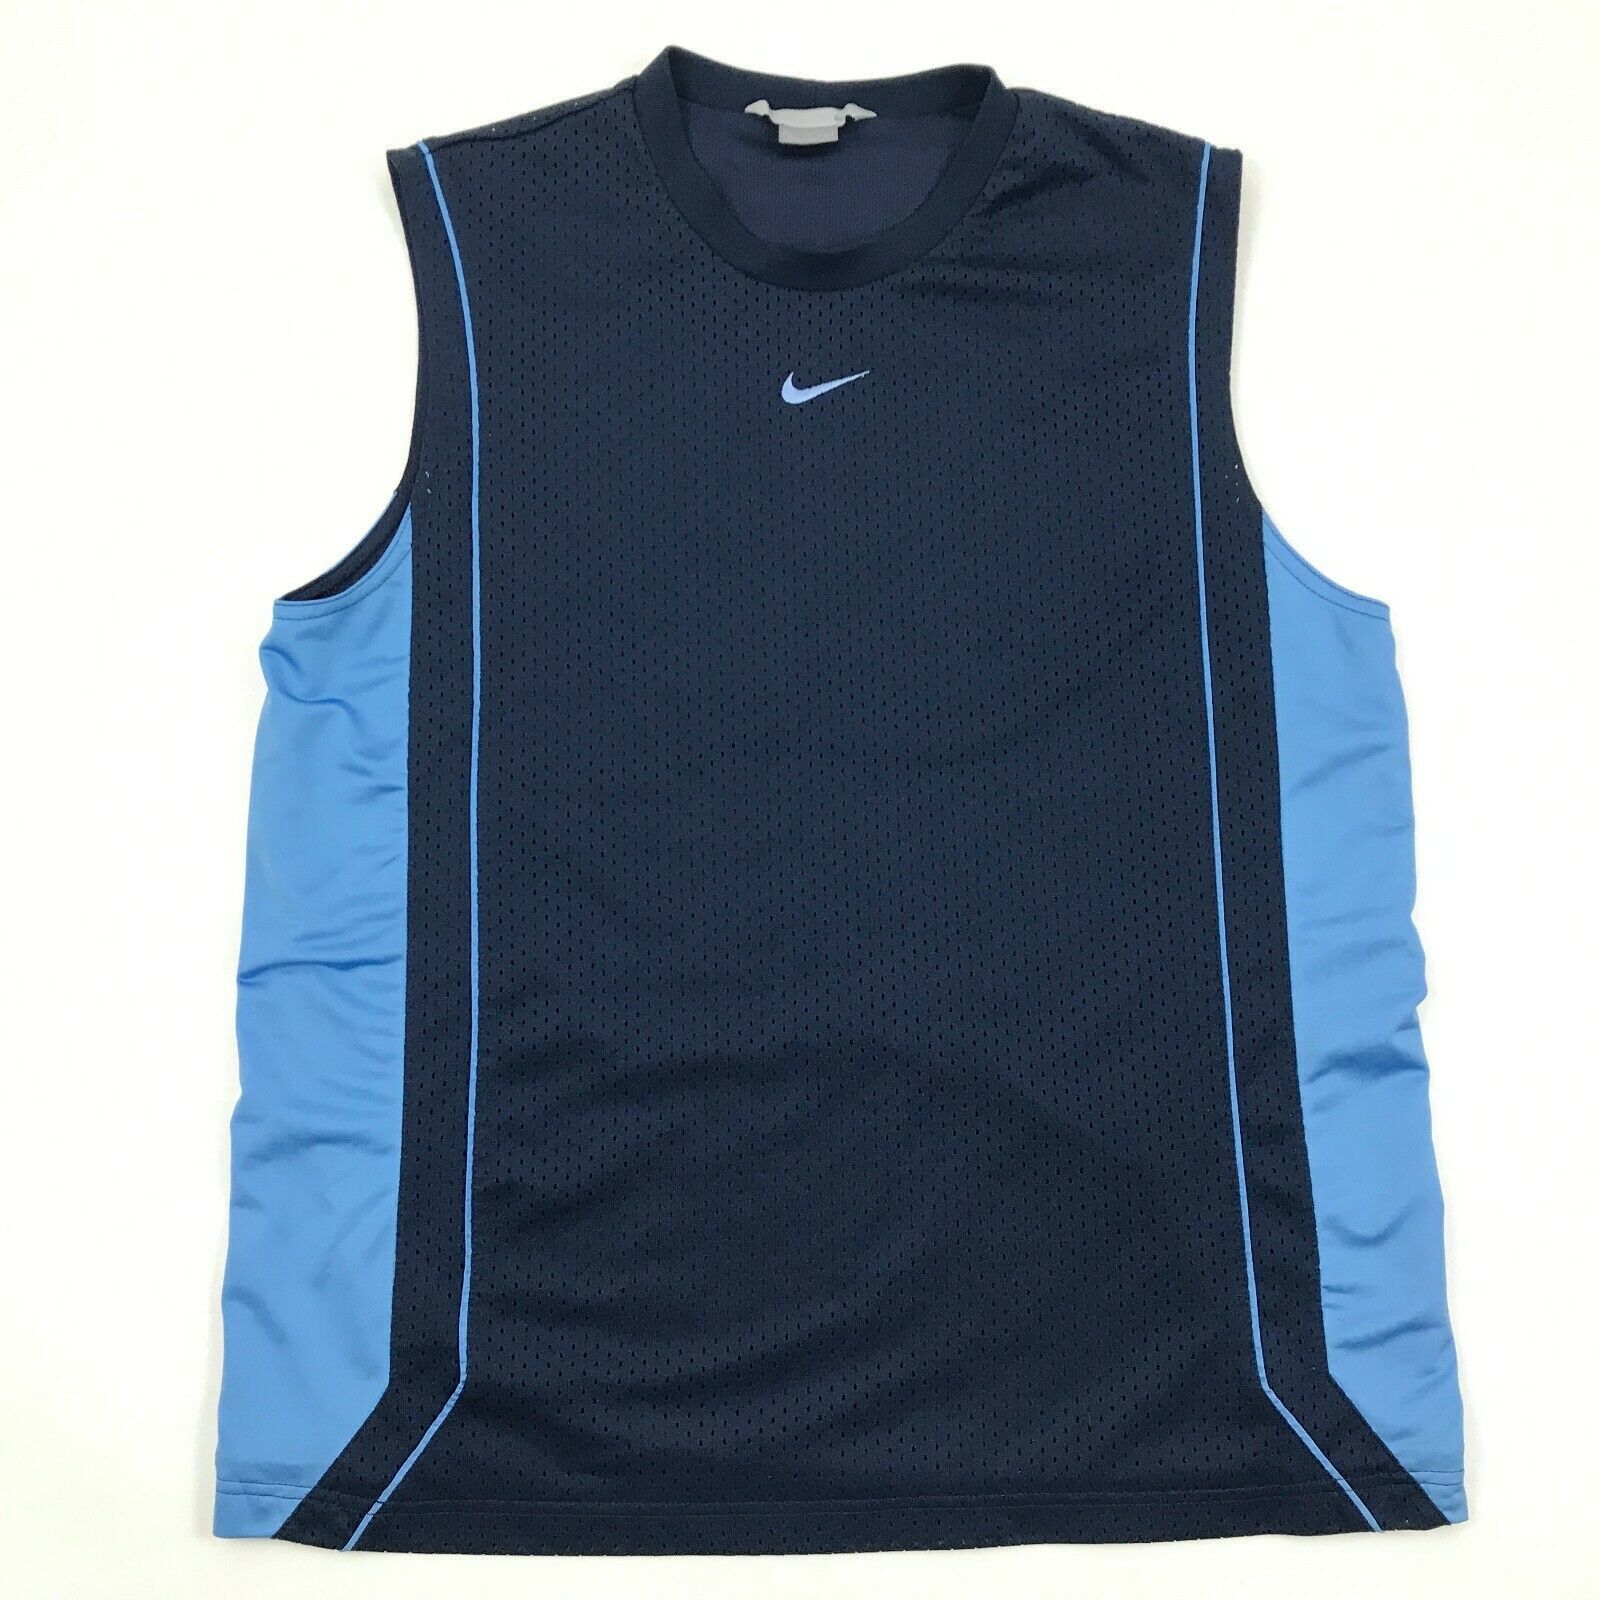 Nike Hombre Azul Camiseta de Baloncesto sin Mangas Halterofilia Camisa ...